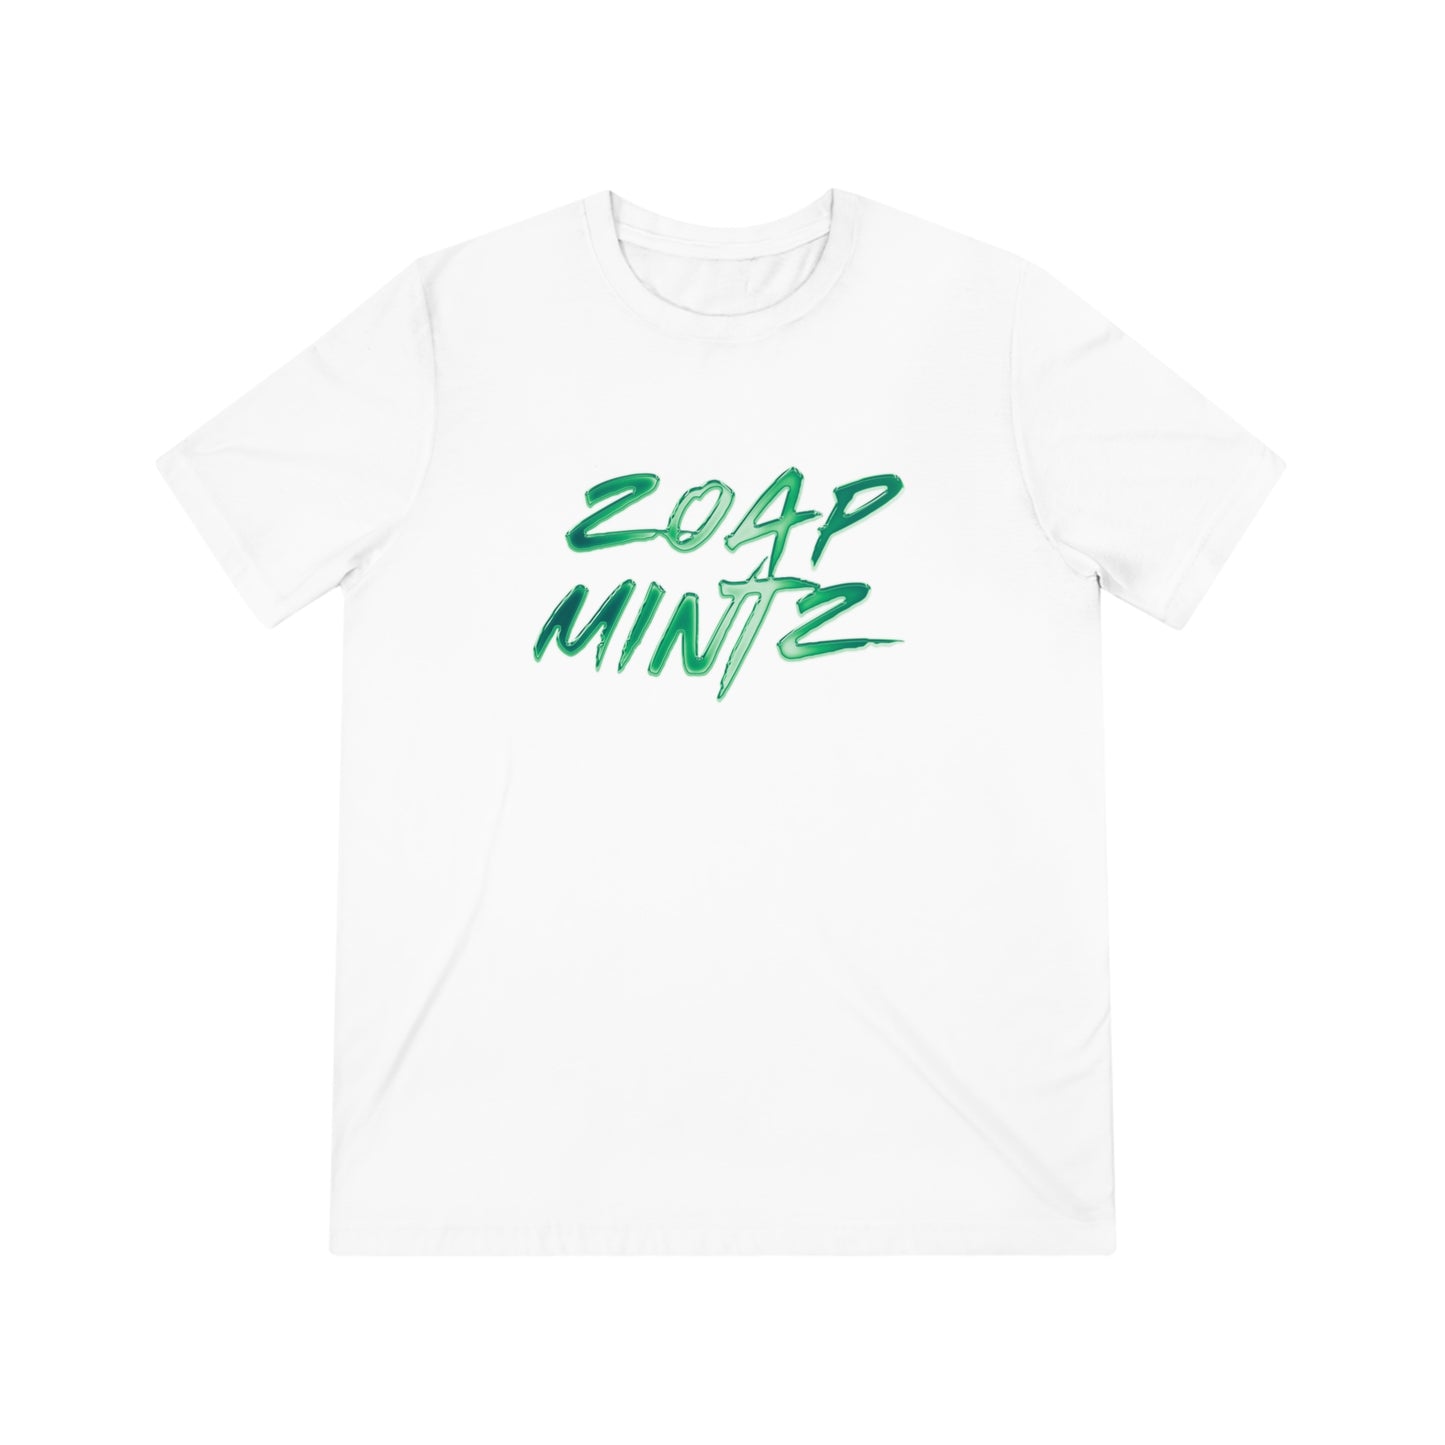 Zoap Mintz - T-Shirt